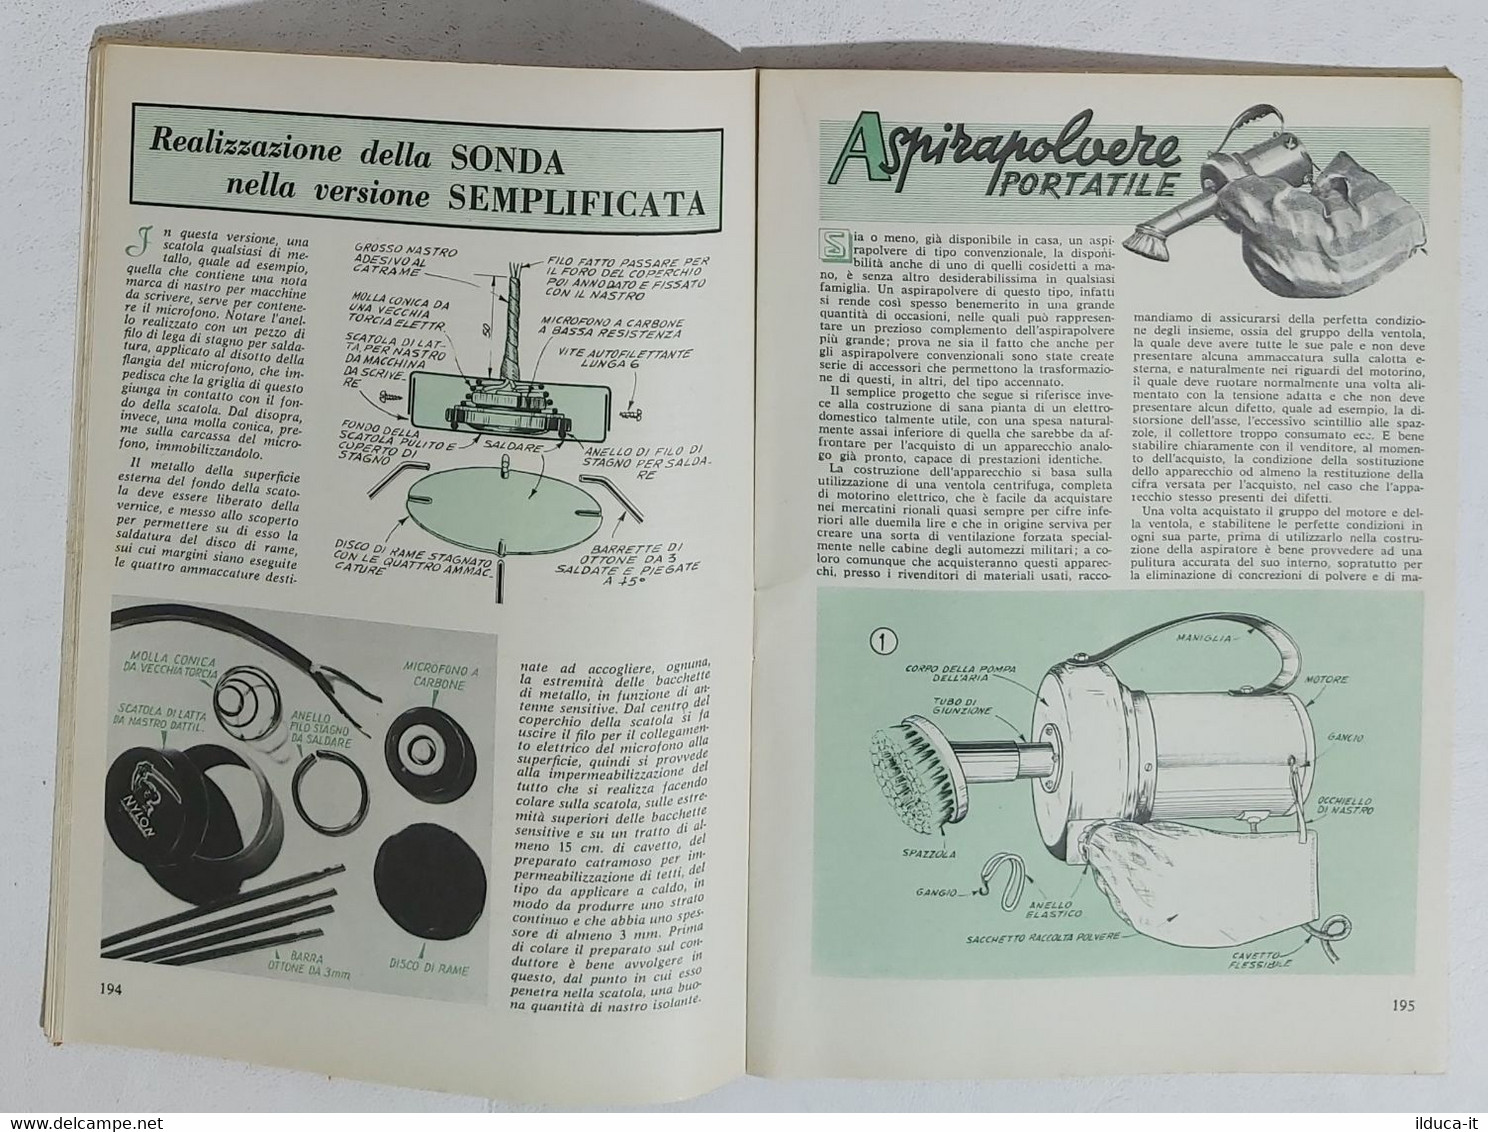 00179 SISTEMA PRATICO A. XII N. 4 1960 - Radiotelefono / Aspirapolvere - Scientific Texts